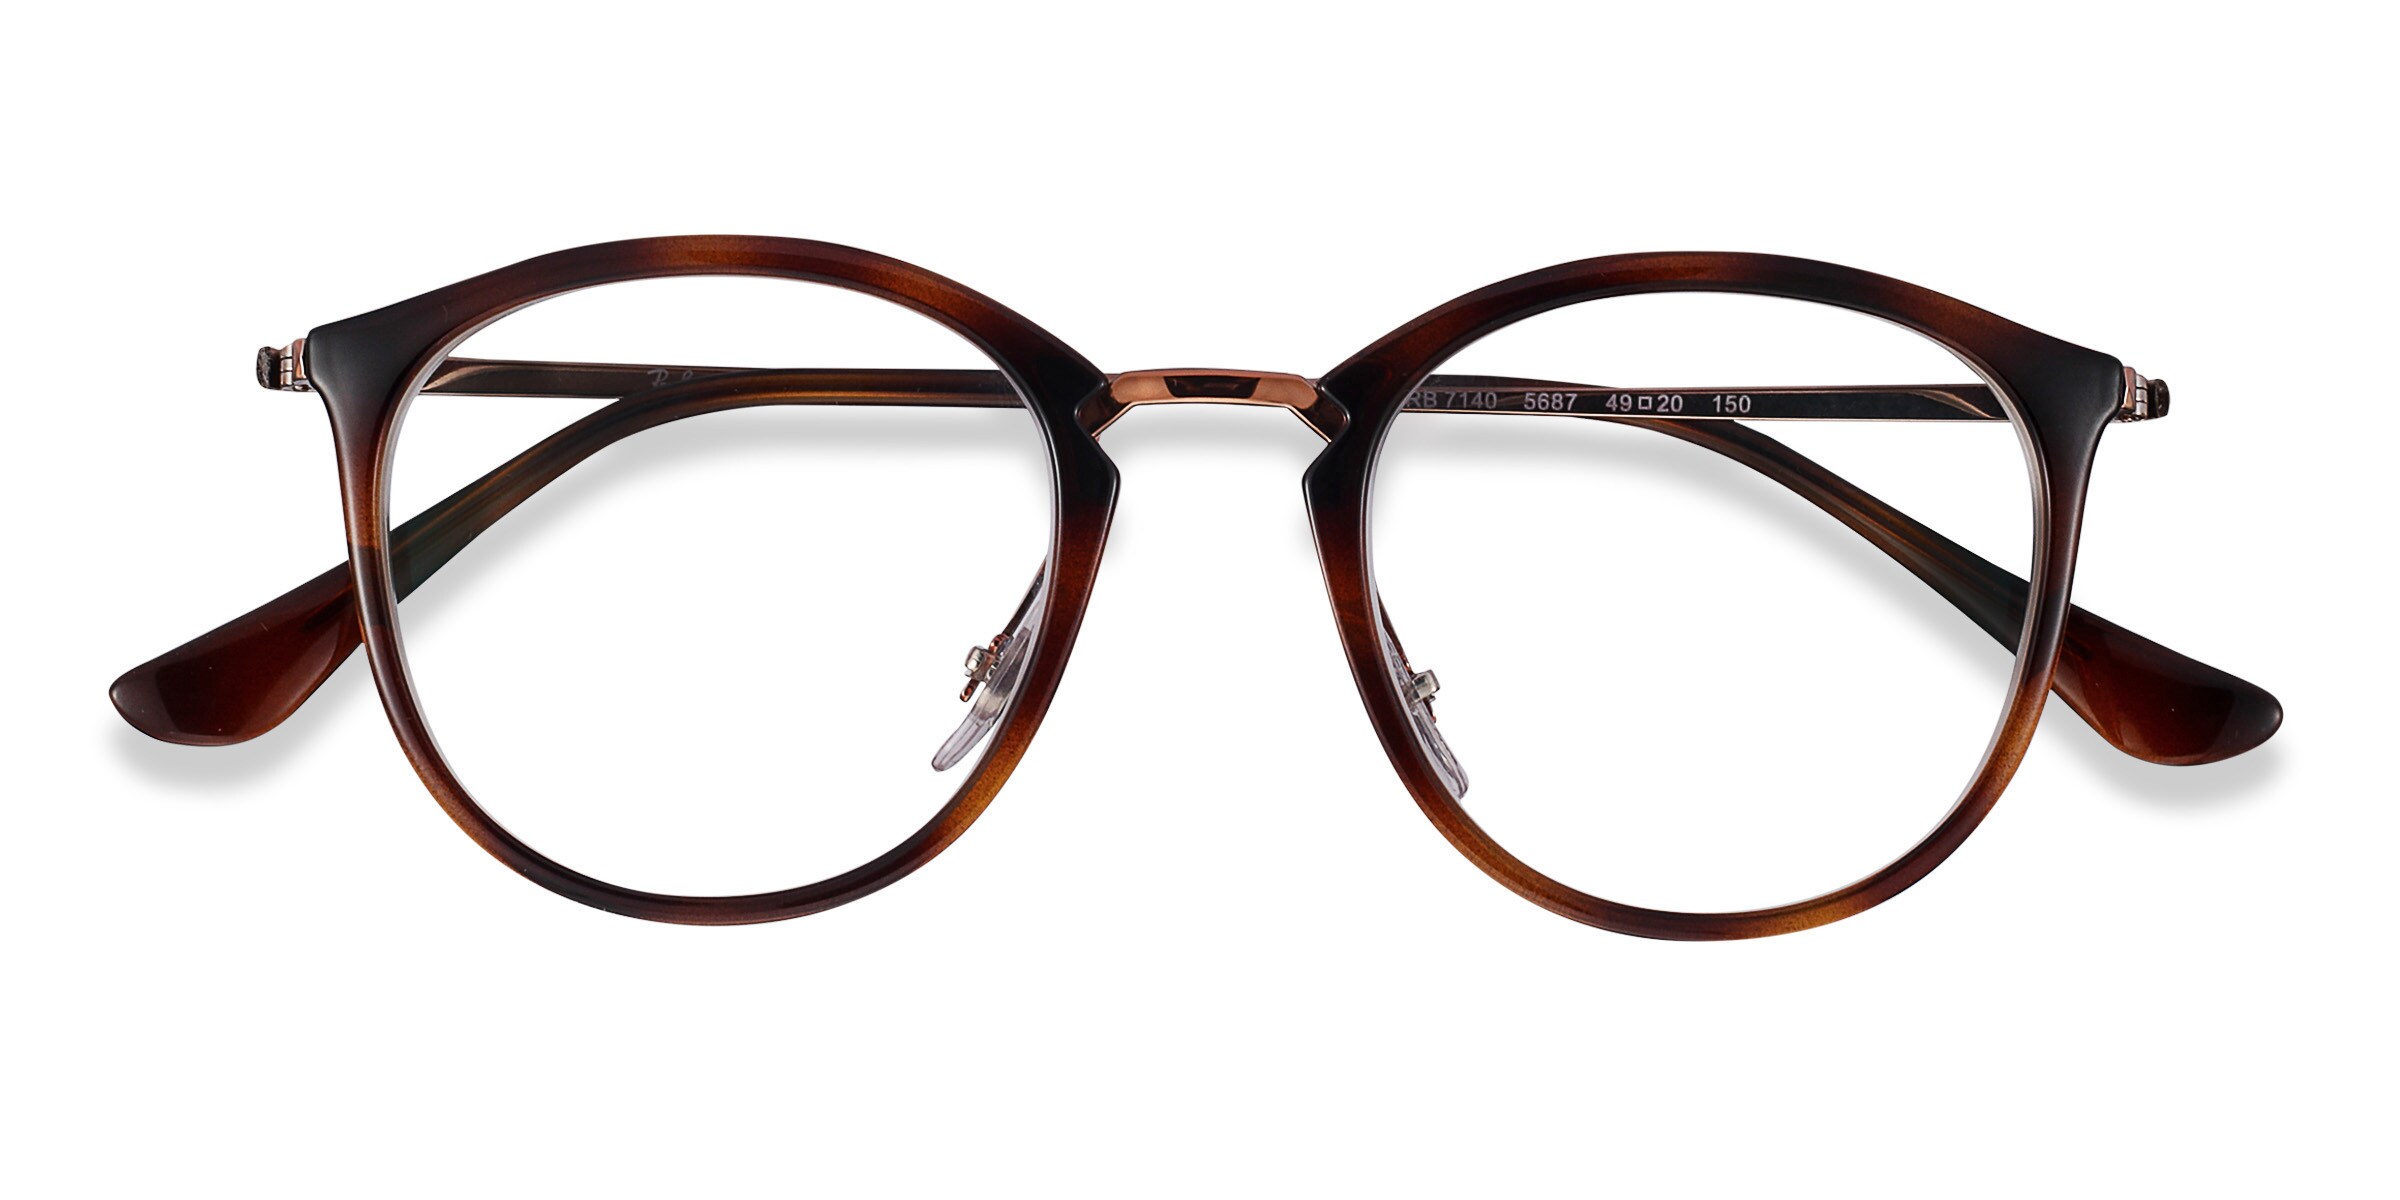 Ray-Ban RB7140 - Round Tortoise Bronze Frame Glasses For Women |  EyeBuyDirect